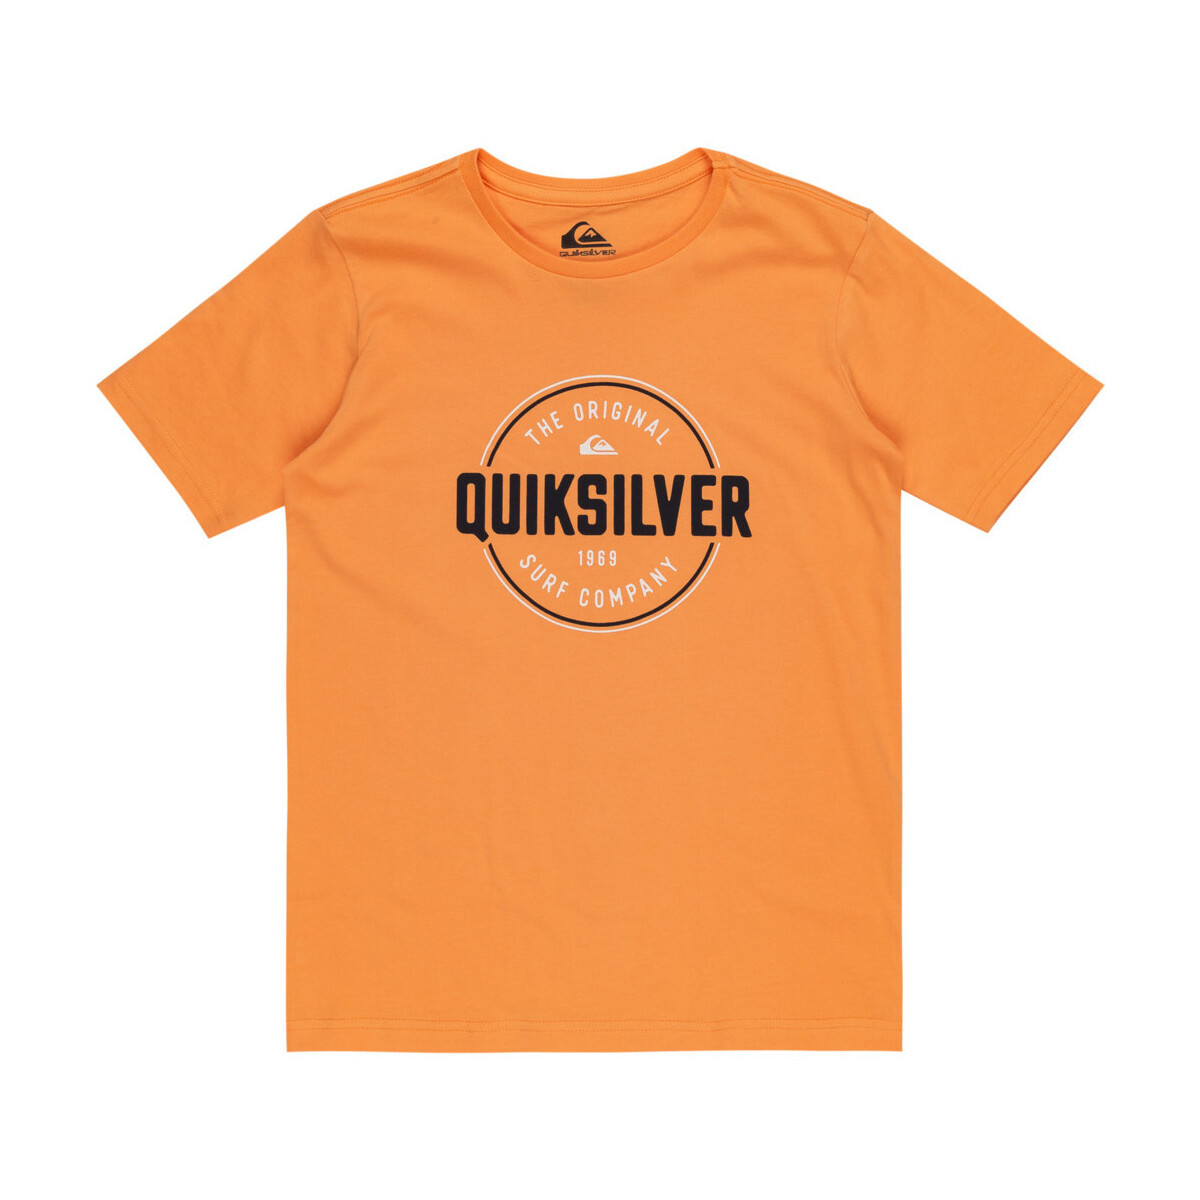 Quiksilver Orange Circle Up zyqHPbw5